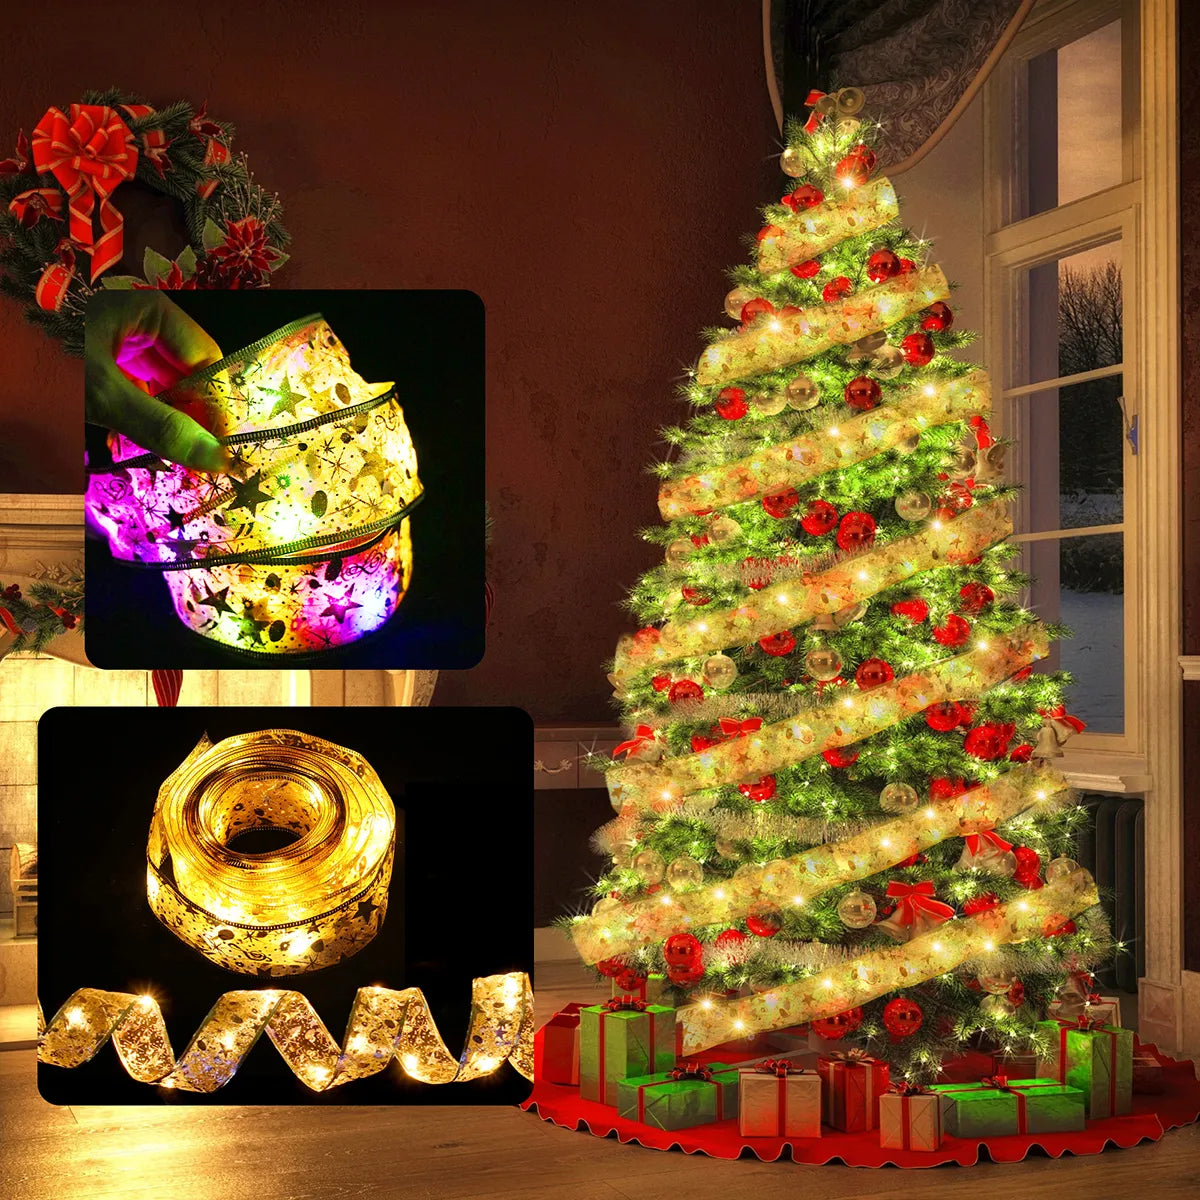 LED Ribbon Fairy Light Christmas Tree Decoration Ornaments - The GoatFind Gold battery model / 1M, Gold battery model / 2M, Gold battery model / 5M, Gold battery model / 10M, Gold battery model 1 / 1M, Gold battery model 1 / 2M, Gold battery model 1 / 5M, Gold battery model 1 / 10M, Gold battery model 2 / 1M, Gold battery model 2 / 2M